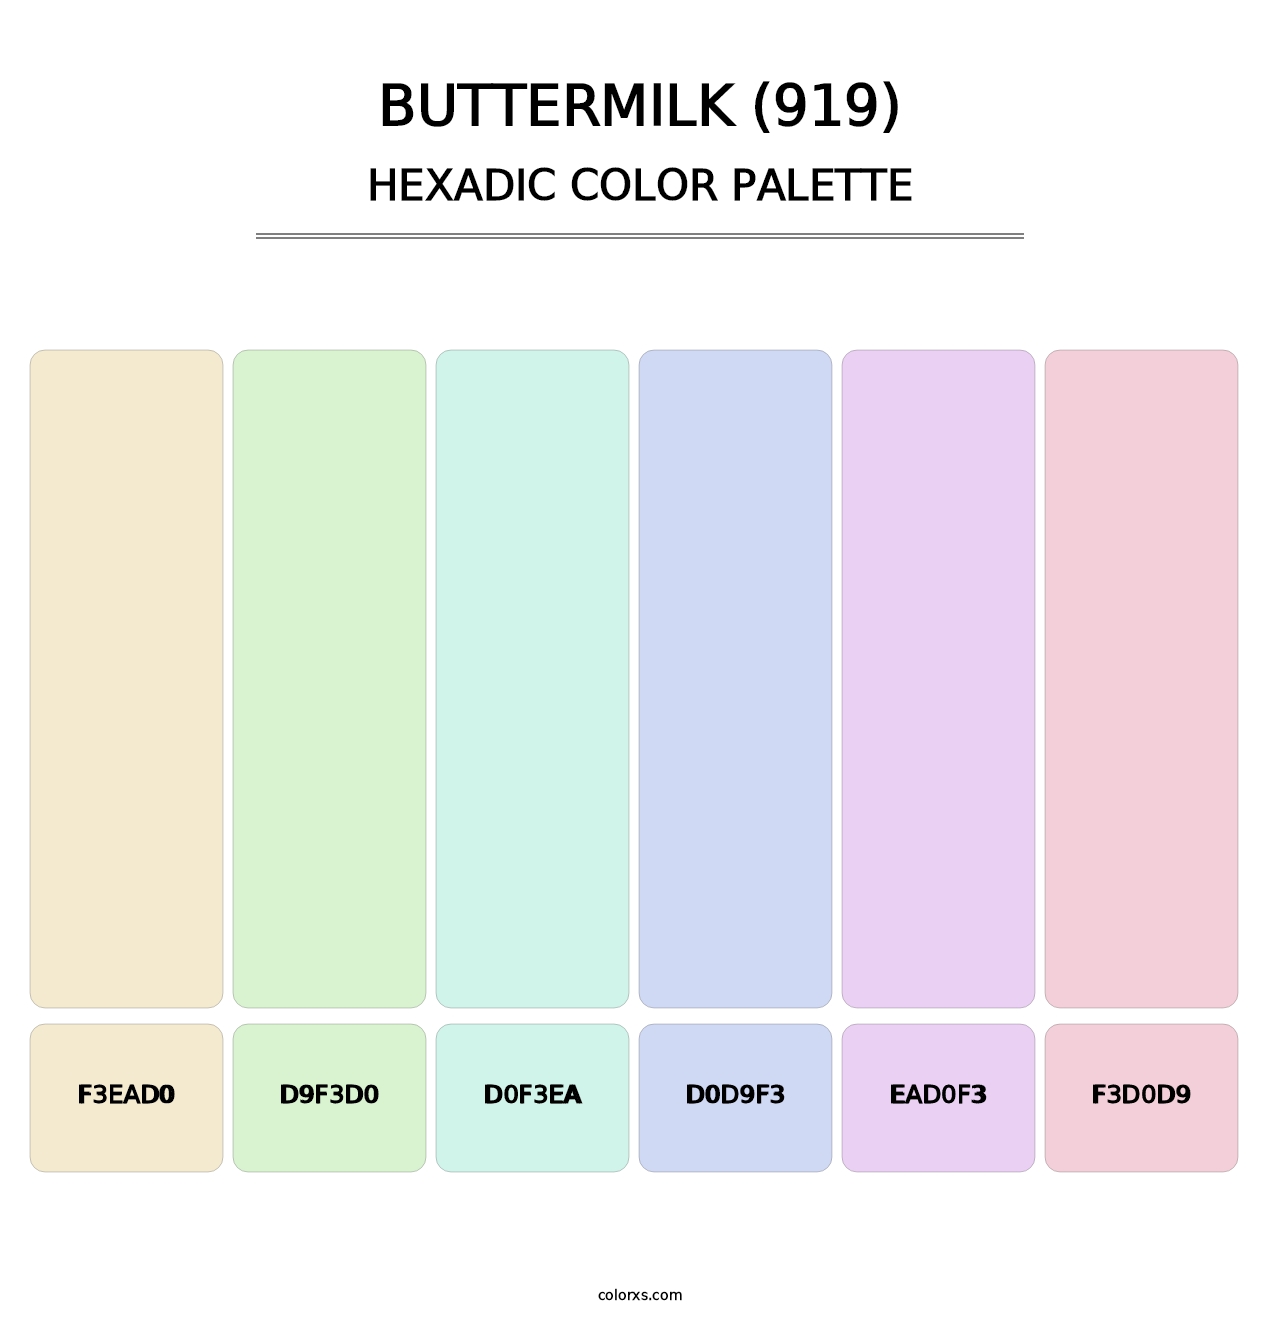 Buttermilk (919) - Hexadic Color Palette